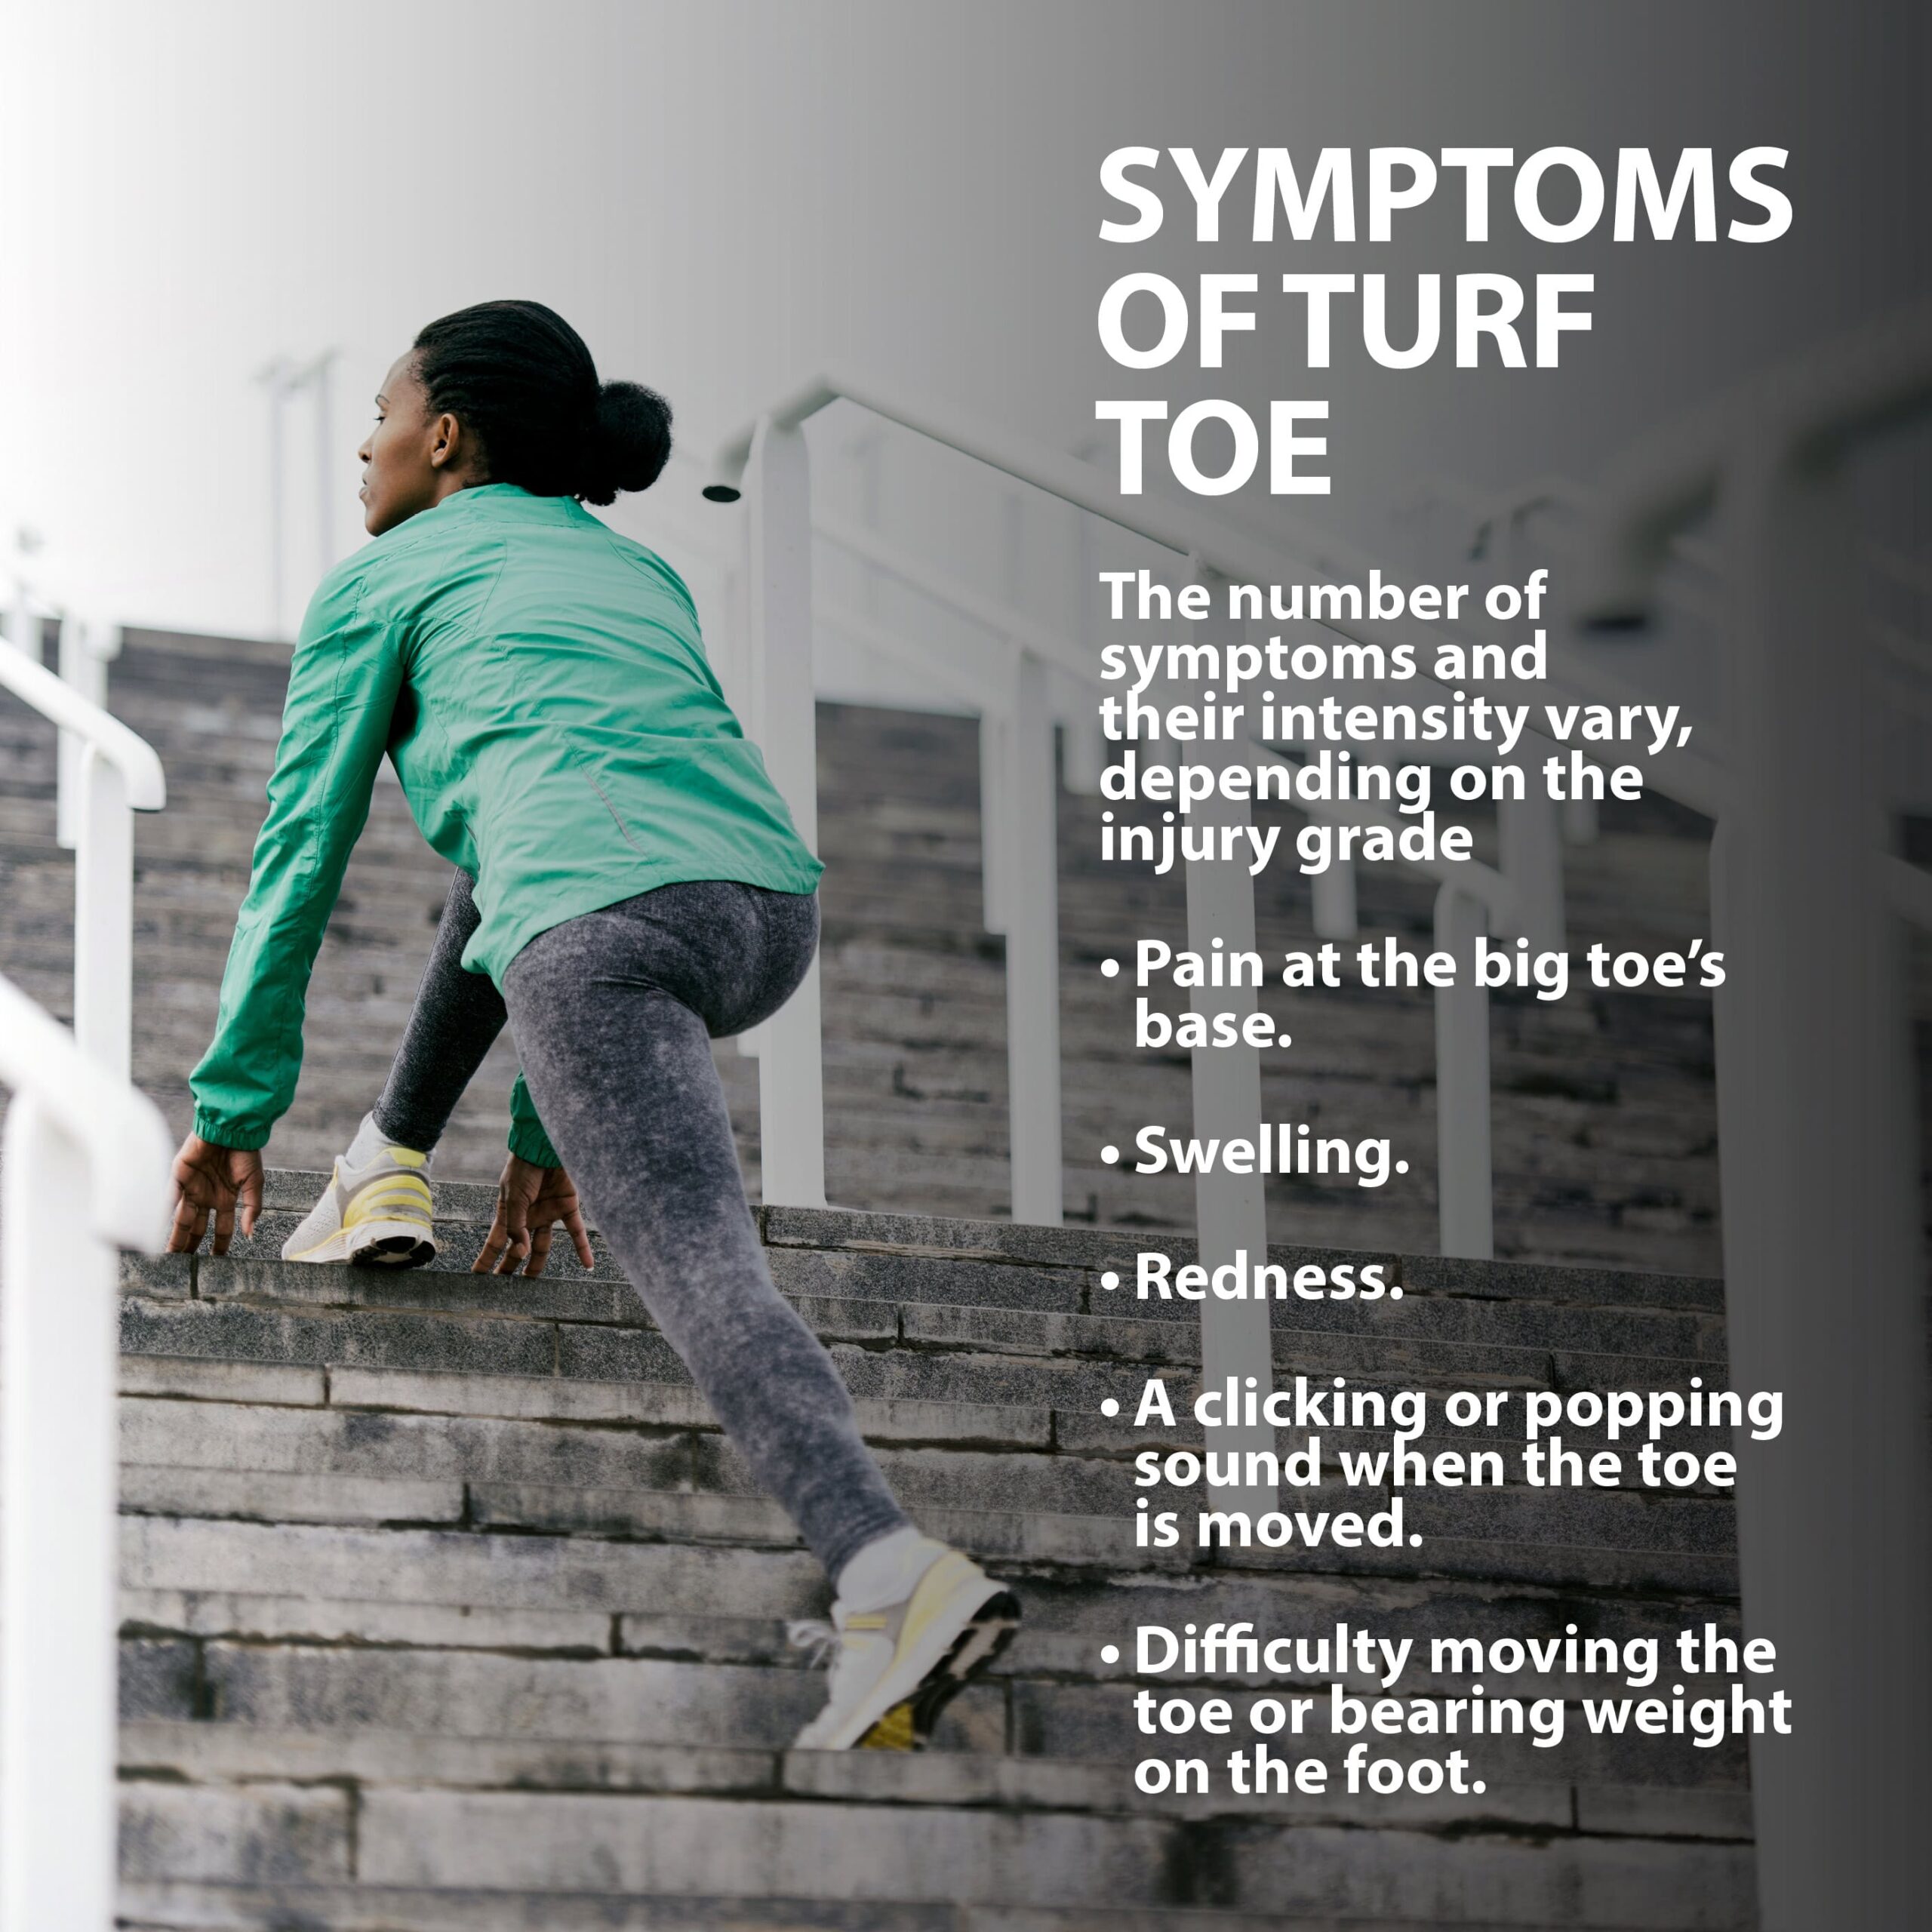 Symptoms of Turf Toe